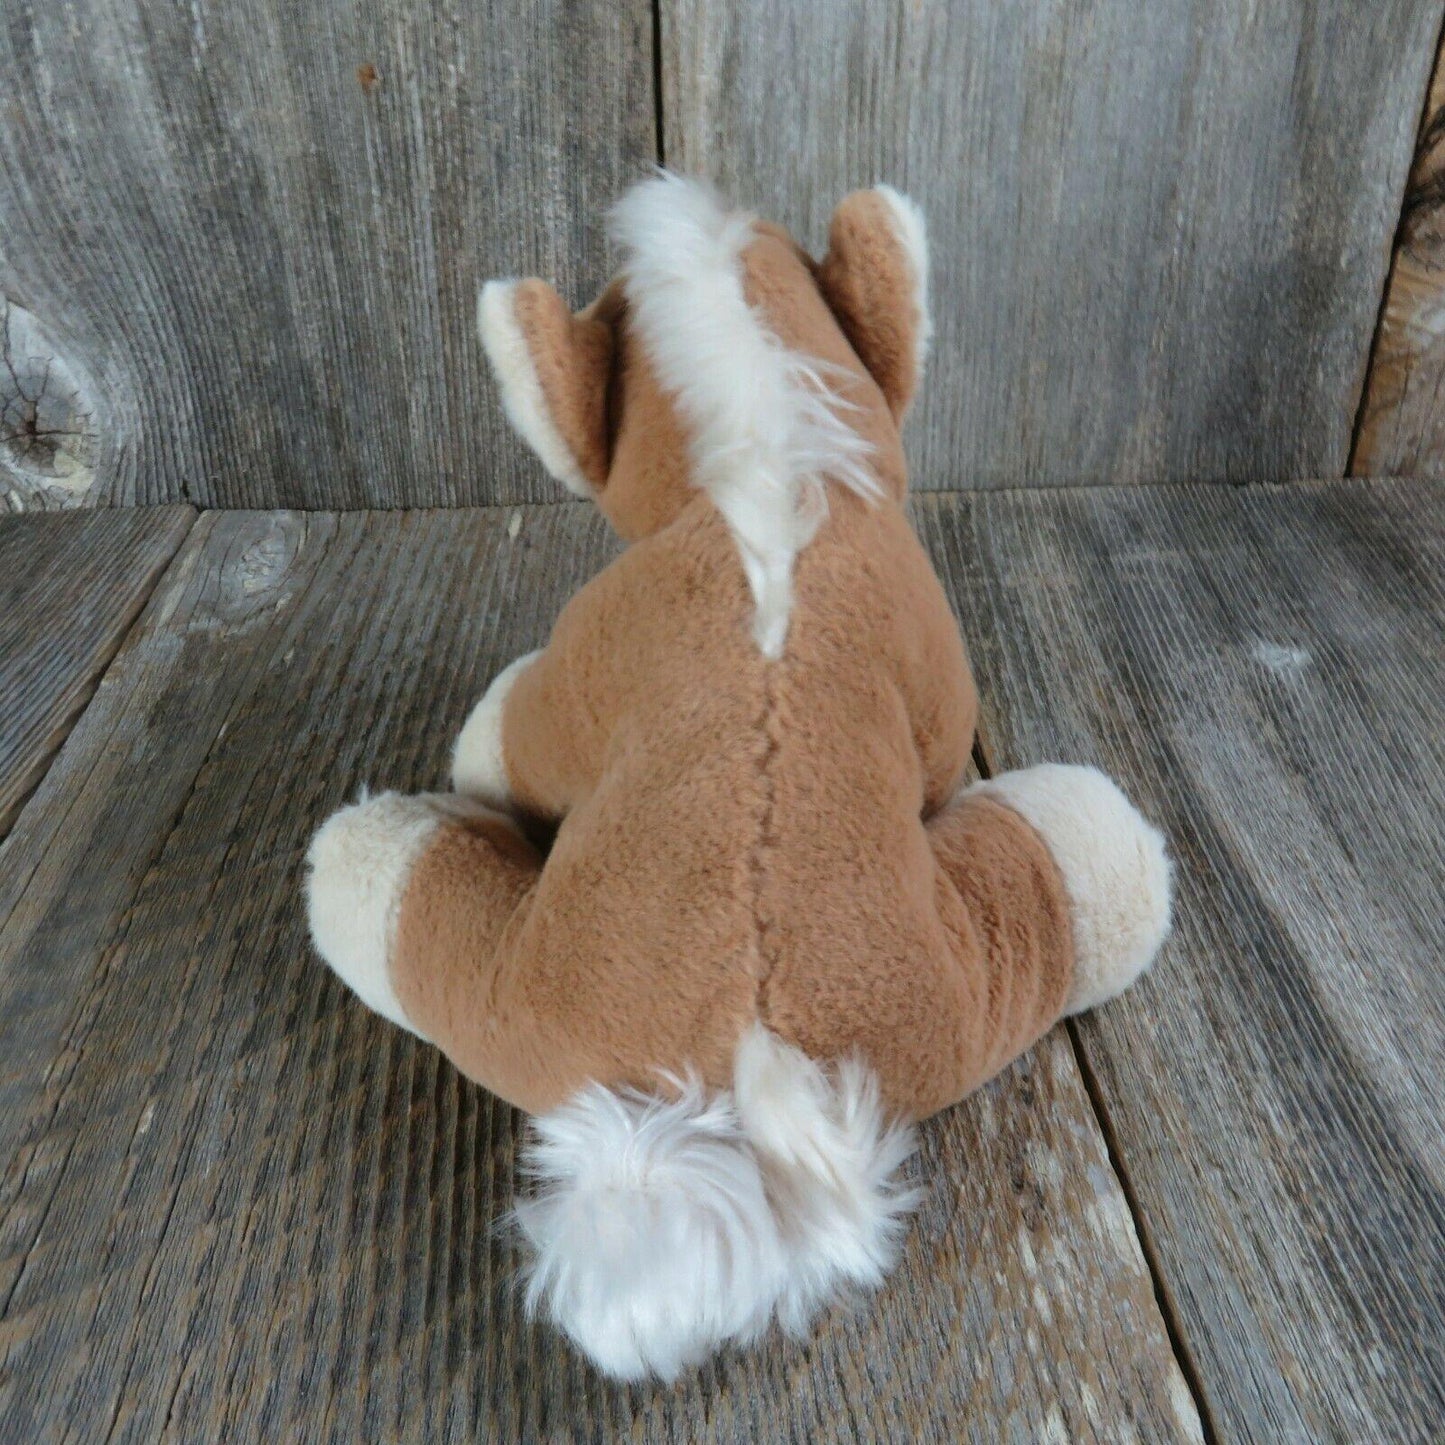 Horse Baby Plush Sewn Eyes Ganz Soft Spots Farm Animal Stuffed Animal